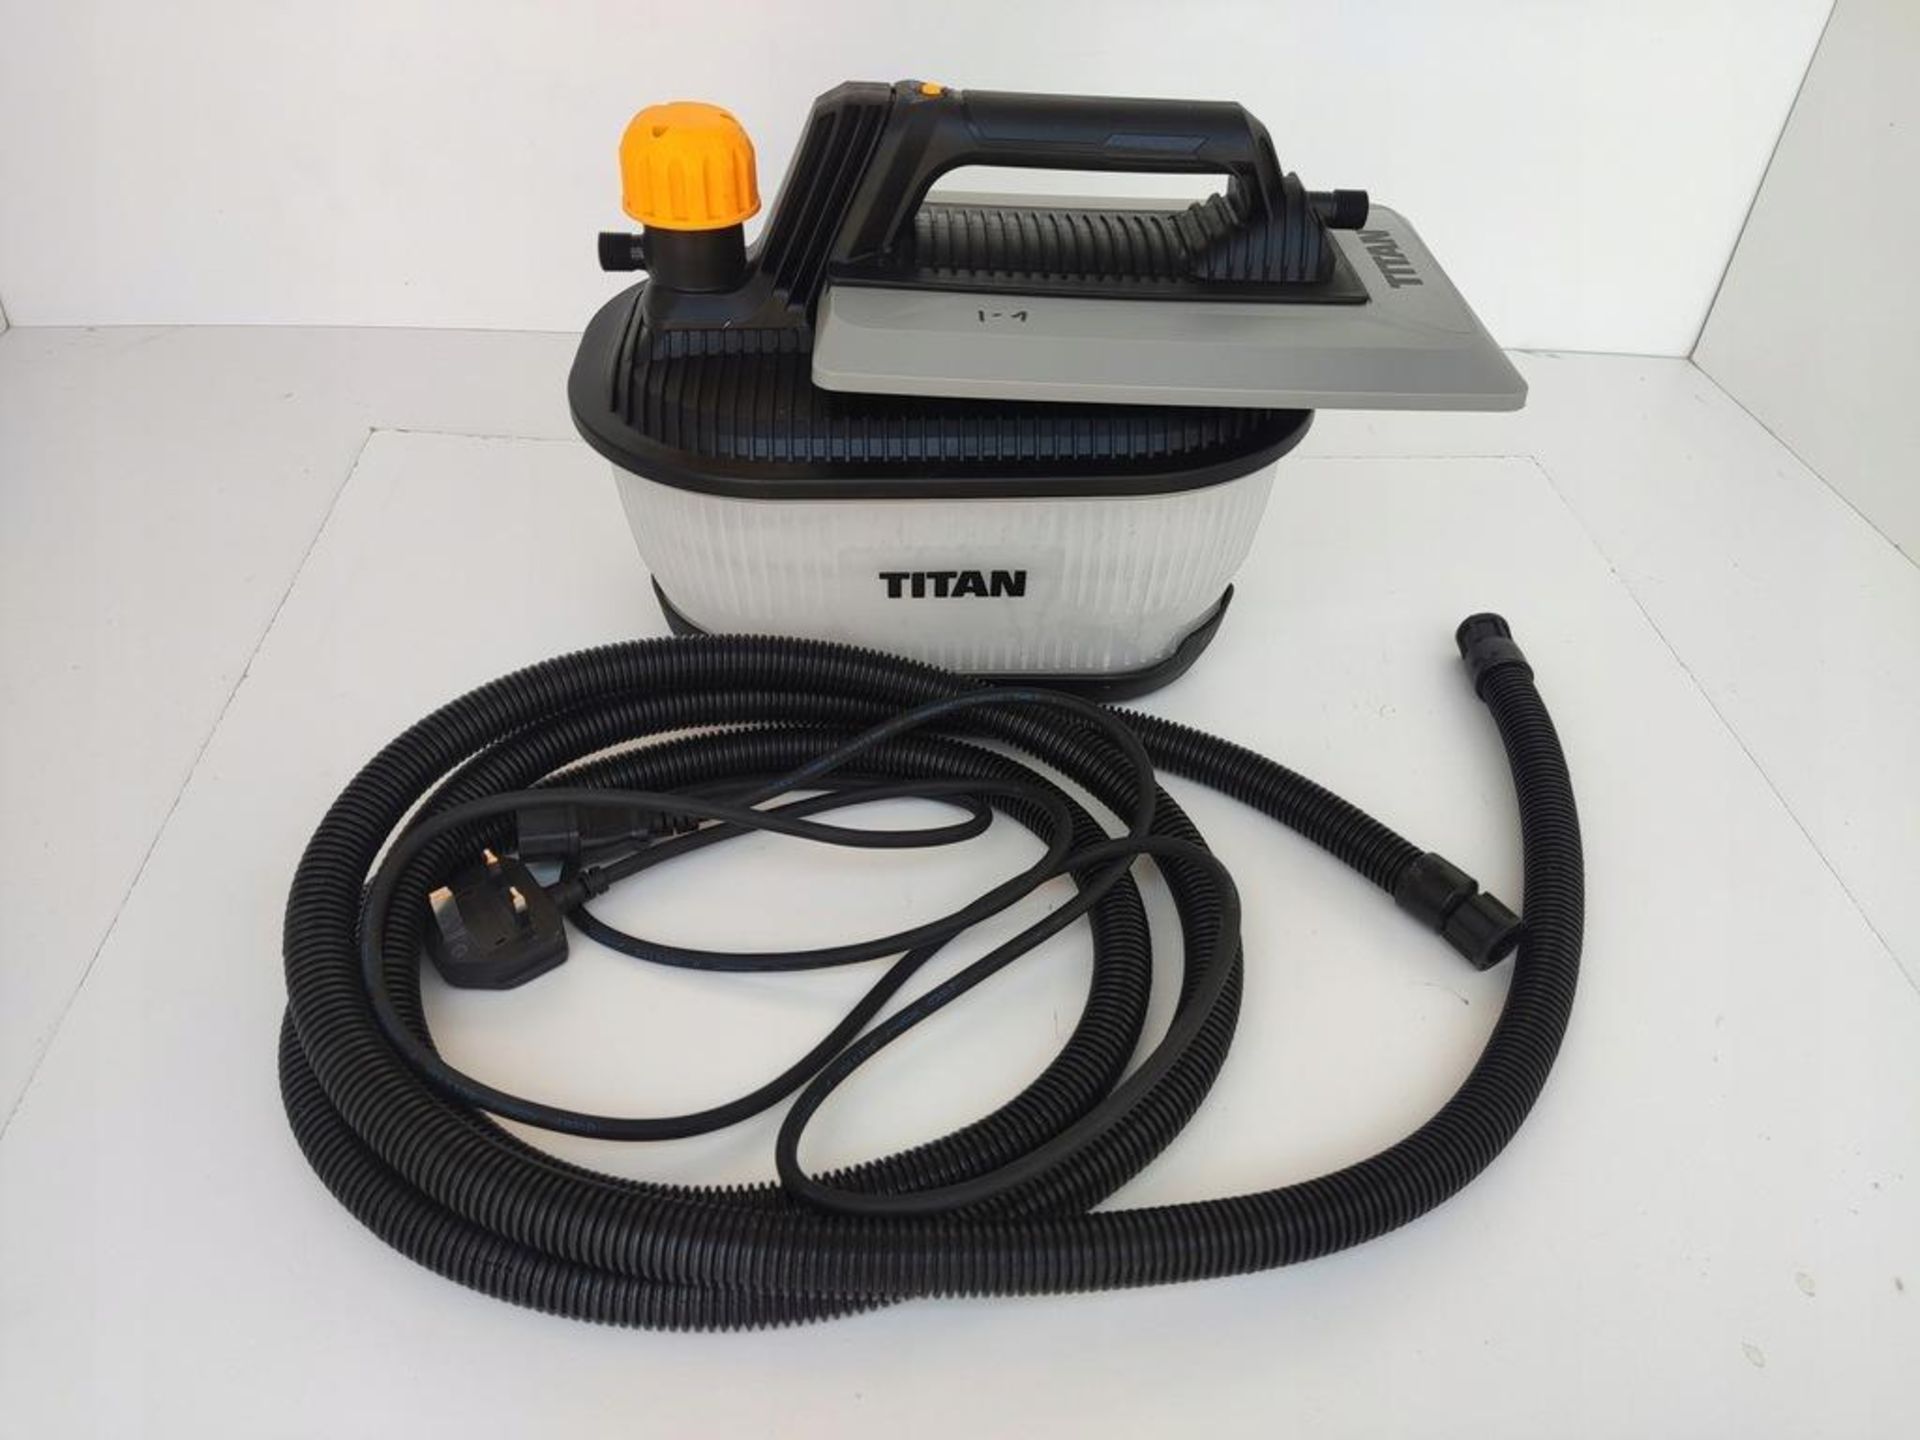 Titan 2000W Steam Wallpaper Stripper TTB772STM 4Ltr Capacity 240V - R13a.12. The item was only use